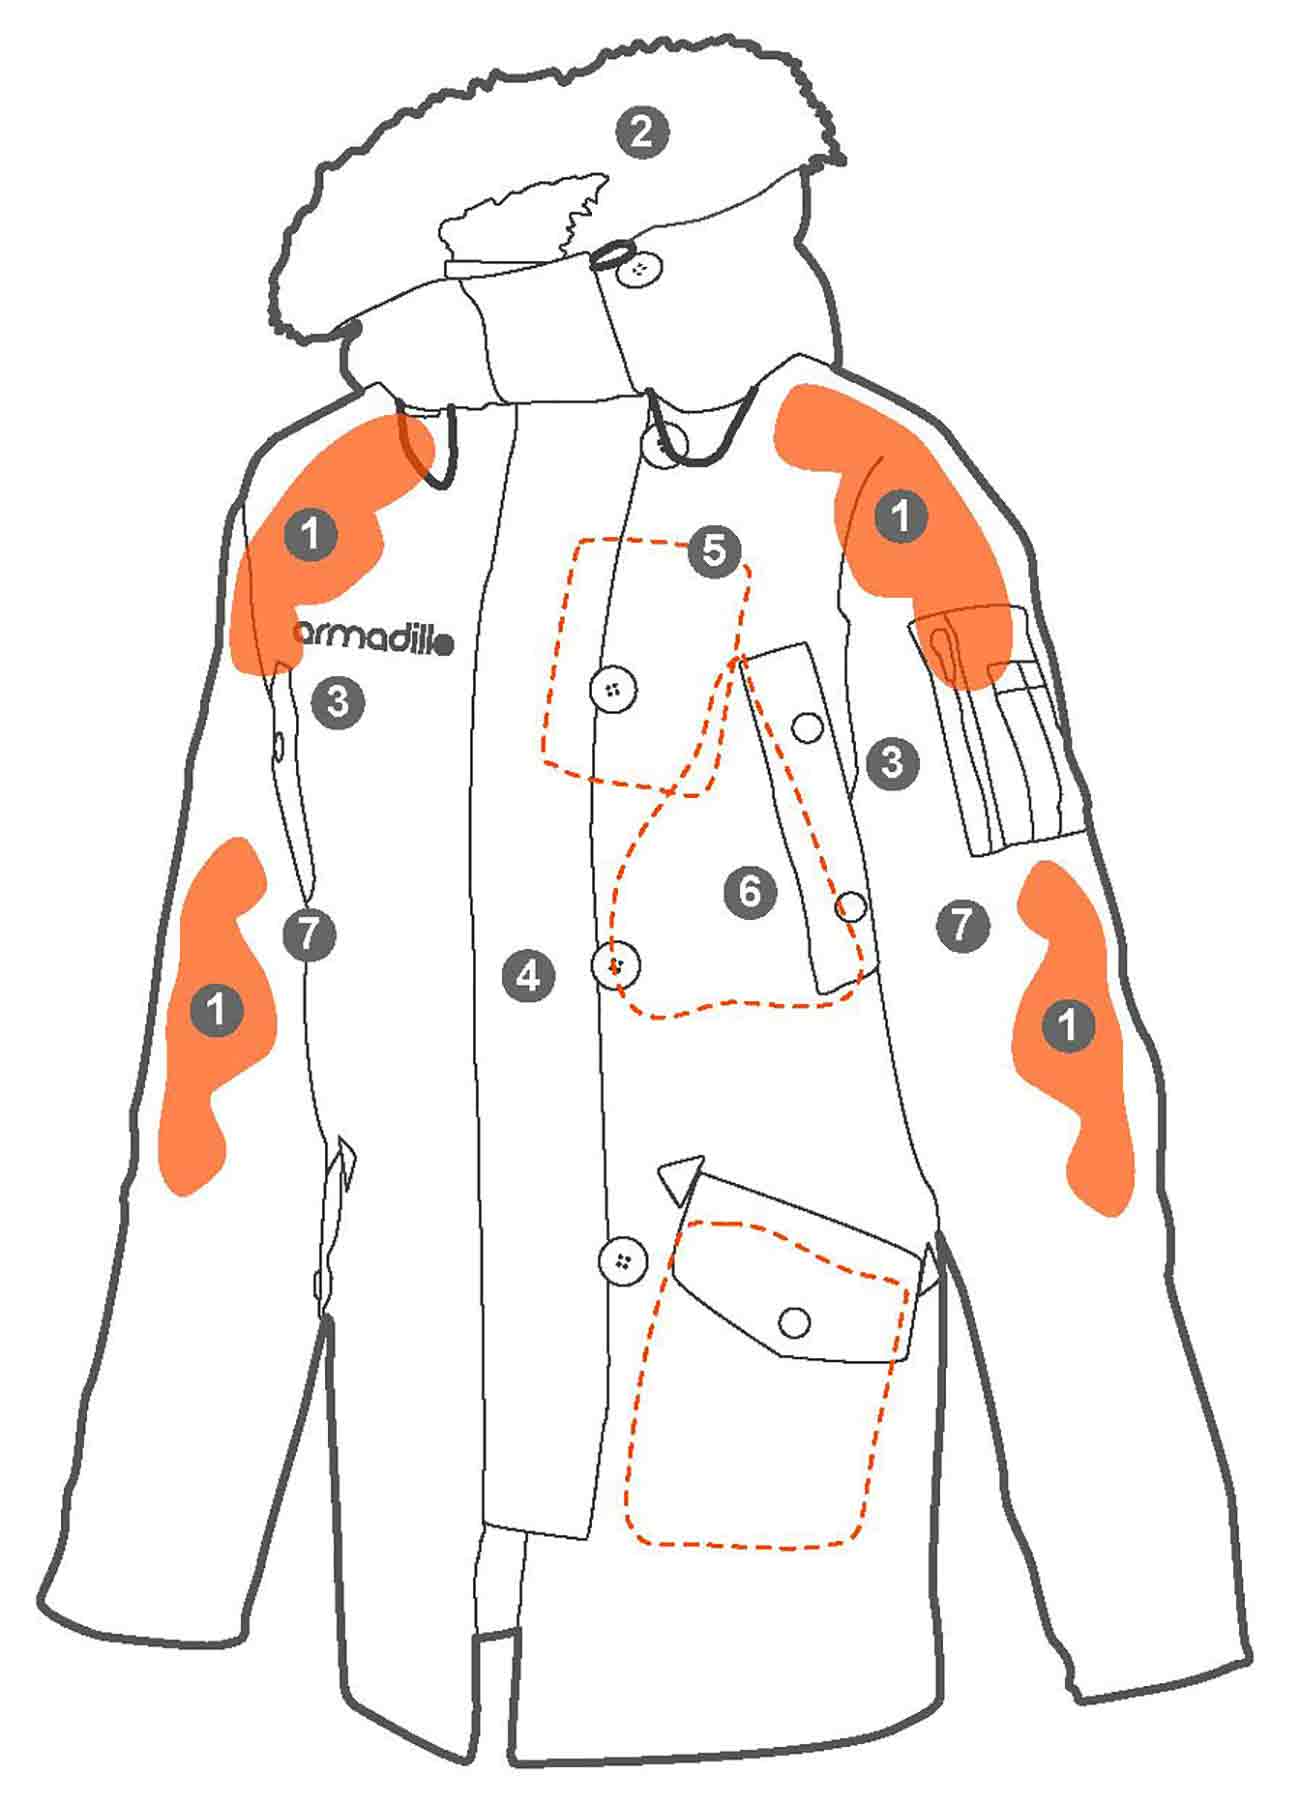 Ladies Fur Parka Jacket - Fur parka - Jacket - women's jacket - Armadillo Scooterwear - d30 armour - Melbourne Scooter Warehouse